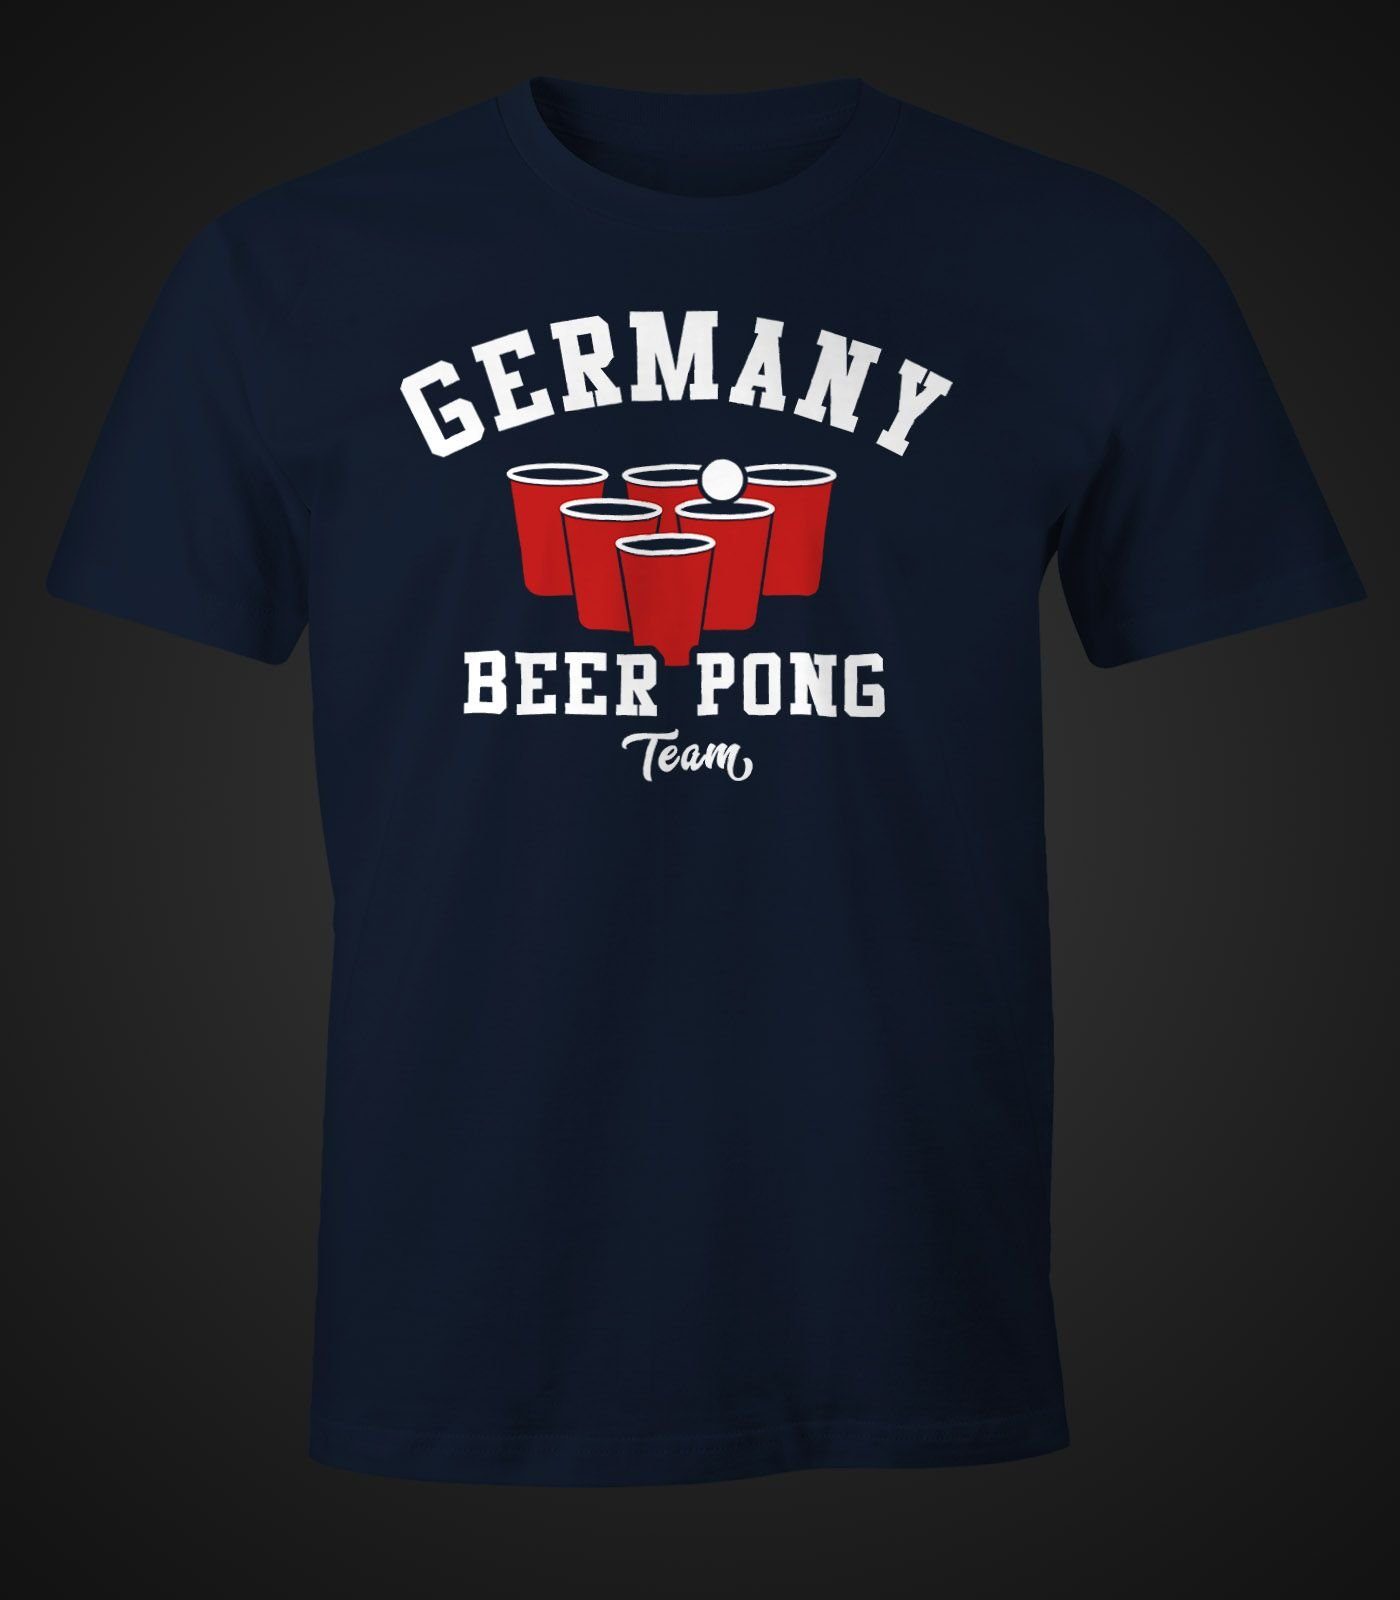 Moonworks® Fun-Shirt Team T-Shirt Herren Germany mit Print-Shirt Bier navy MoonWorks Print Beer Pong